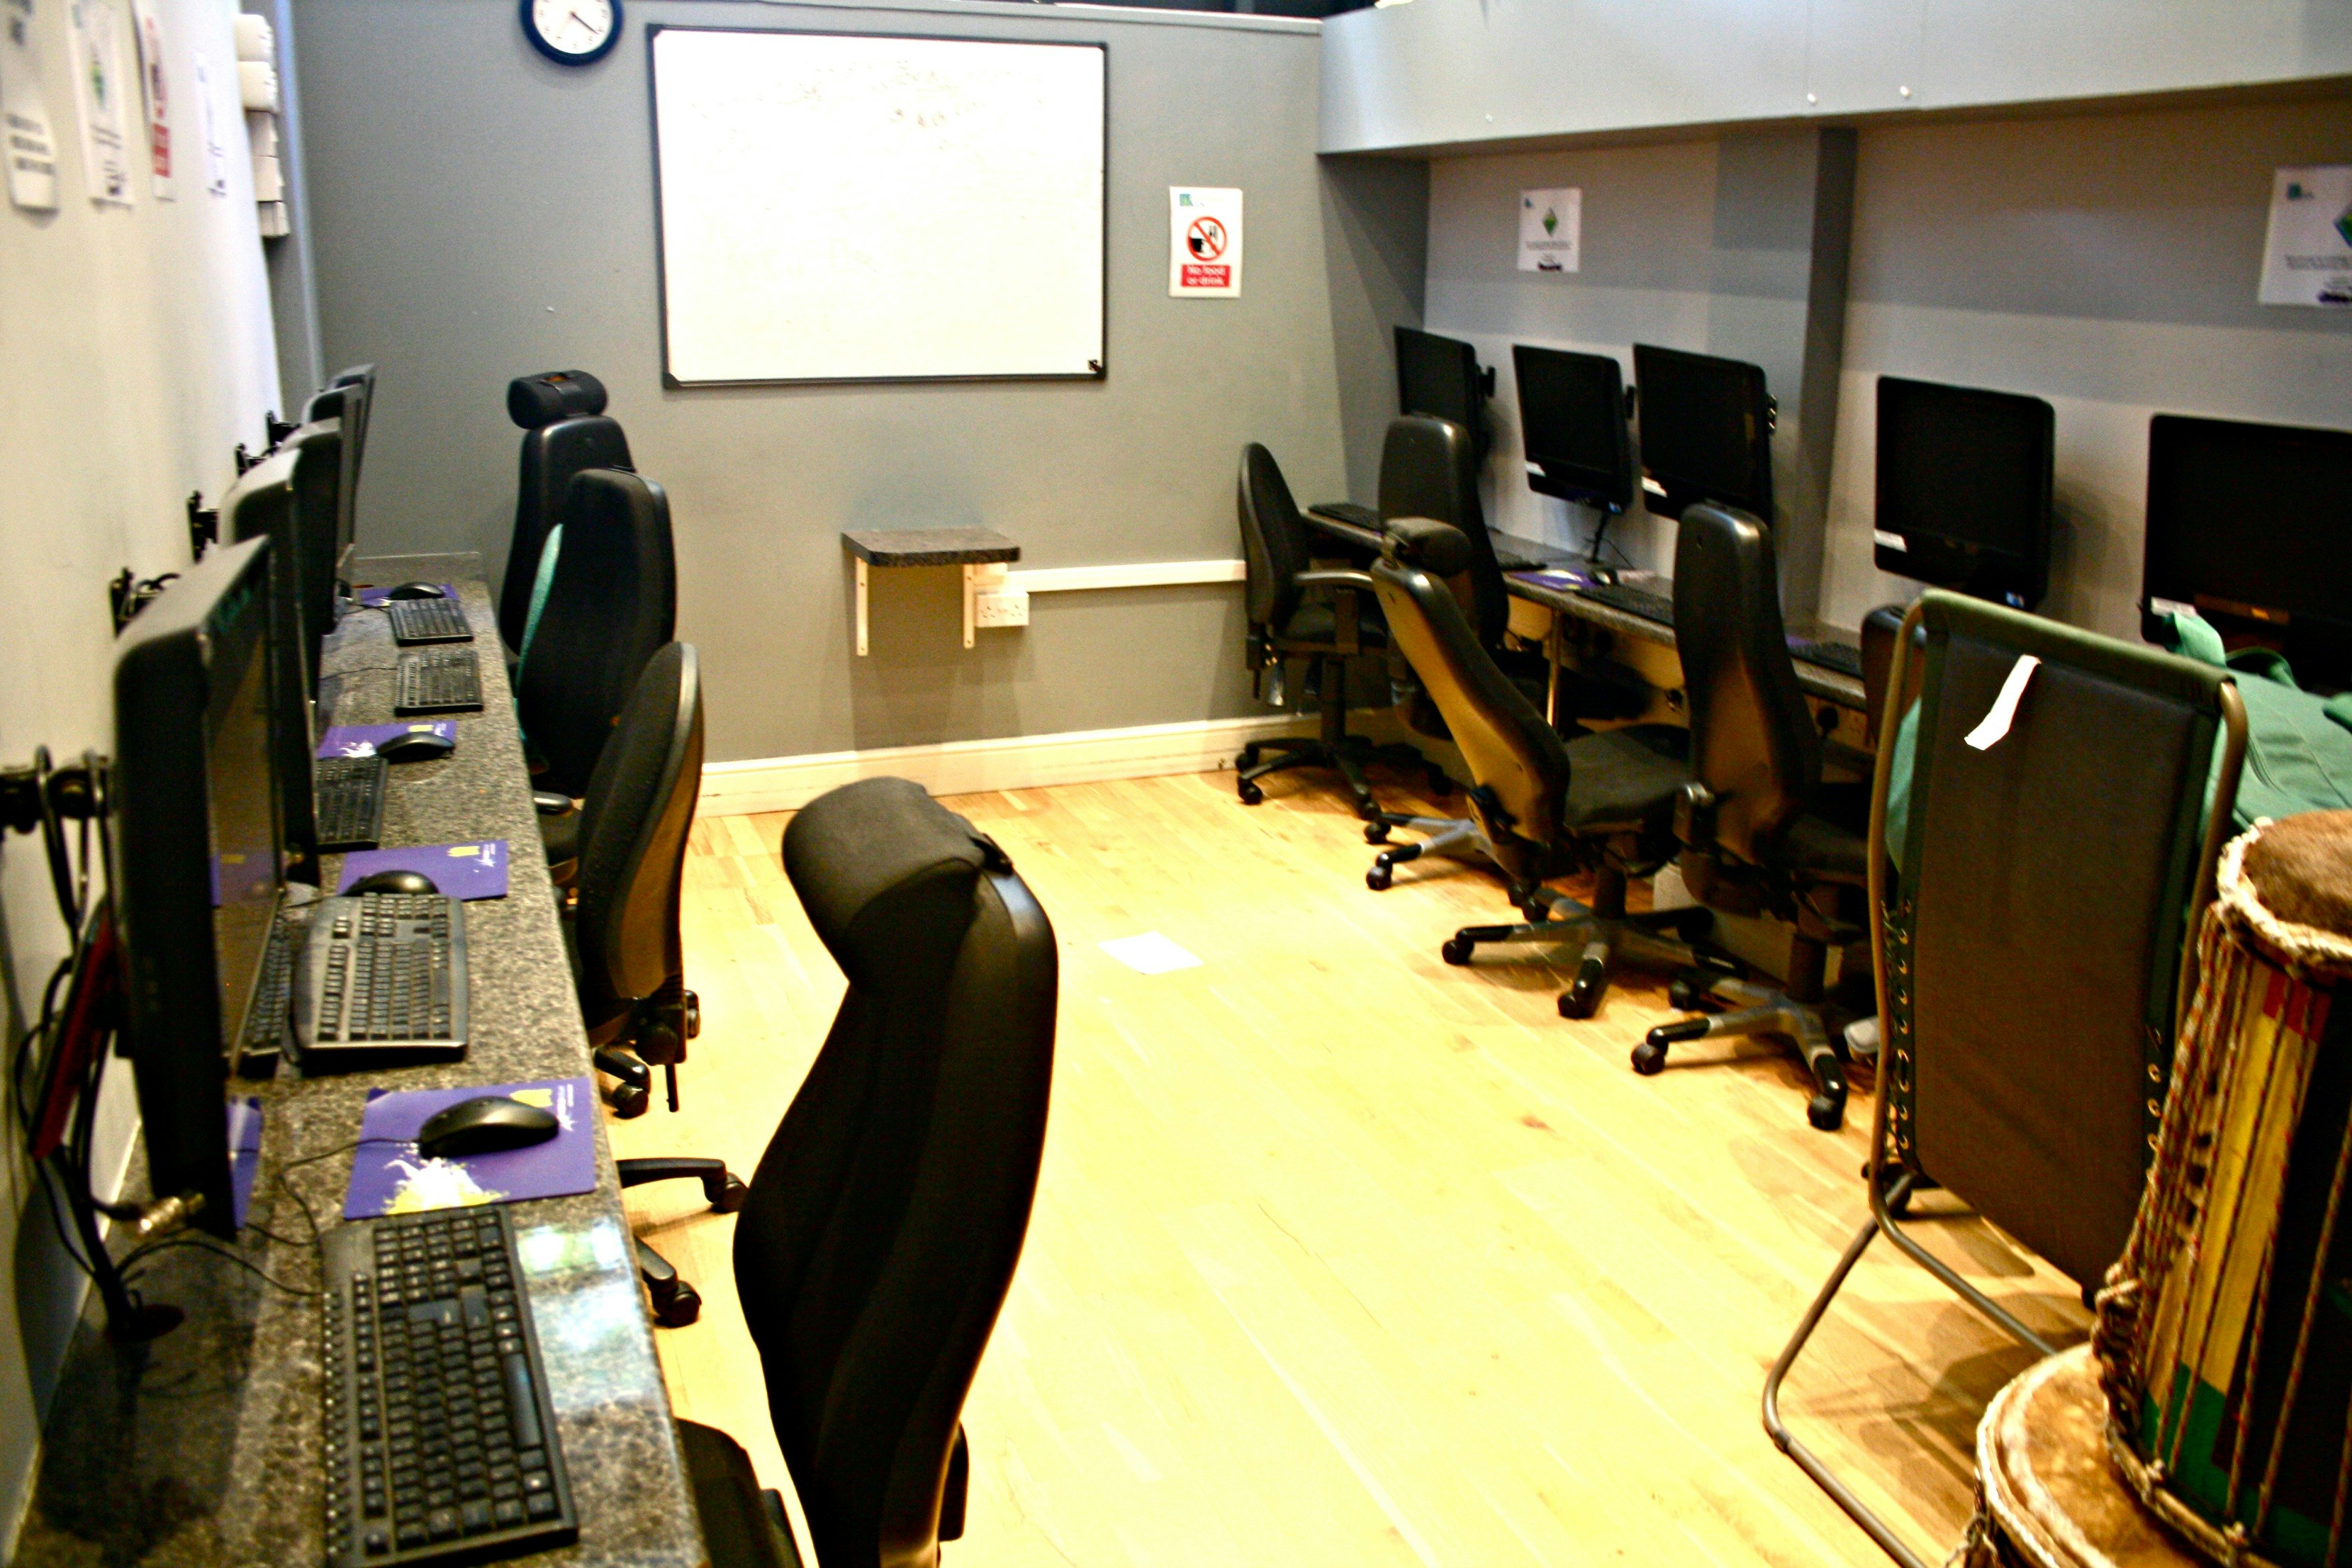 IT Training Venues in London - Queens Crescent Community Centre